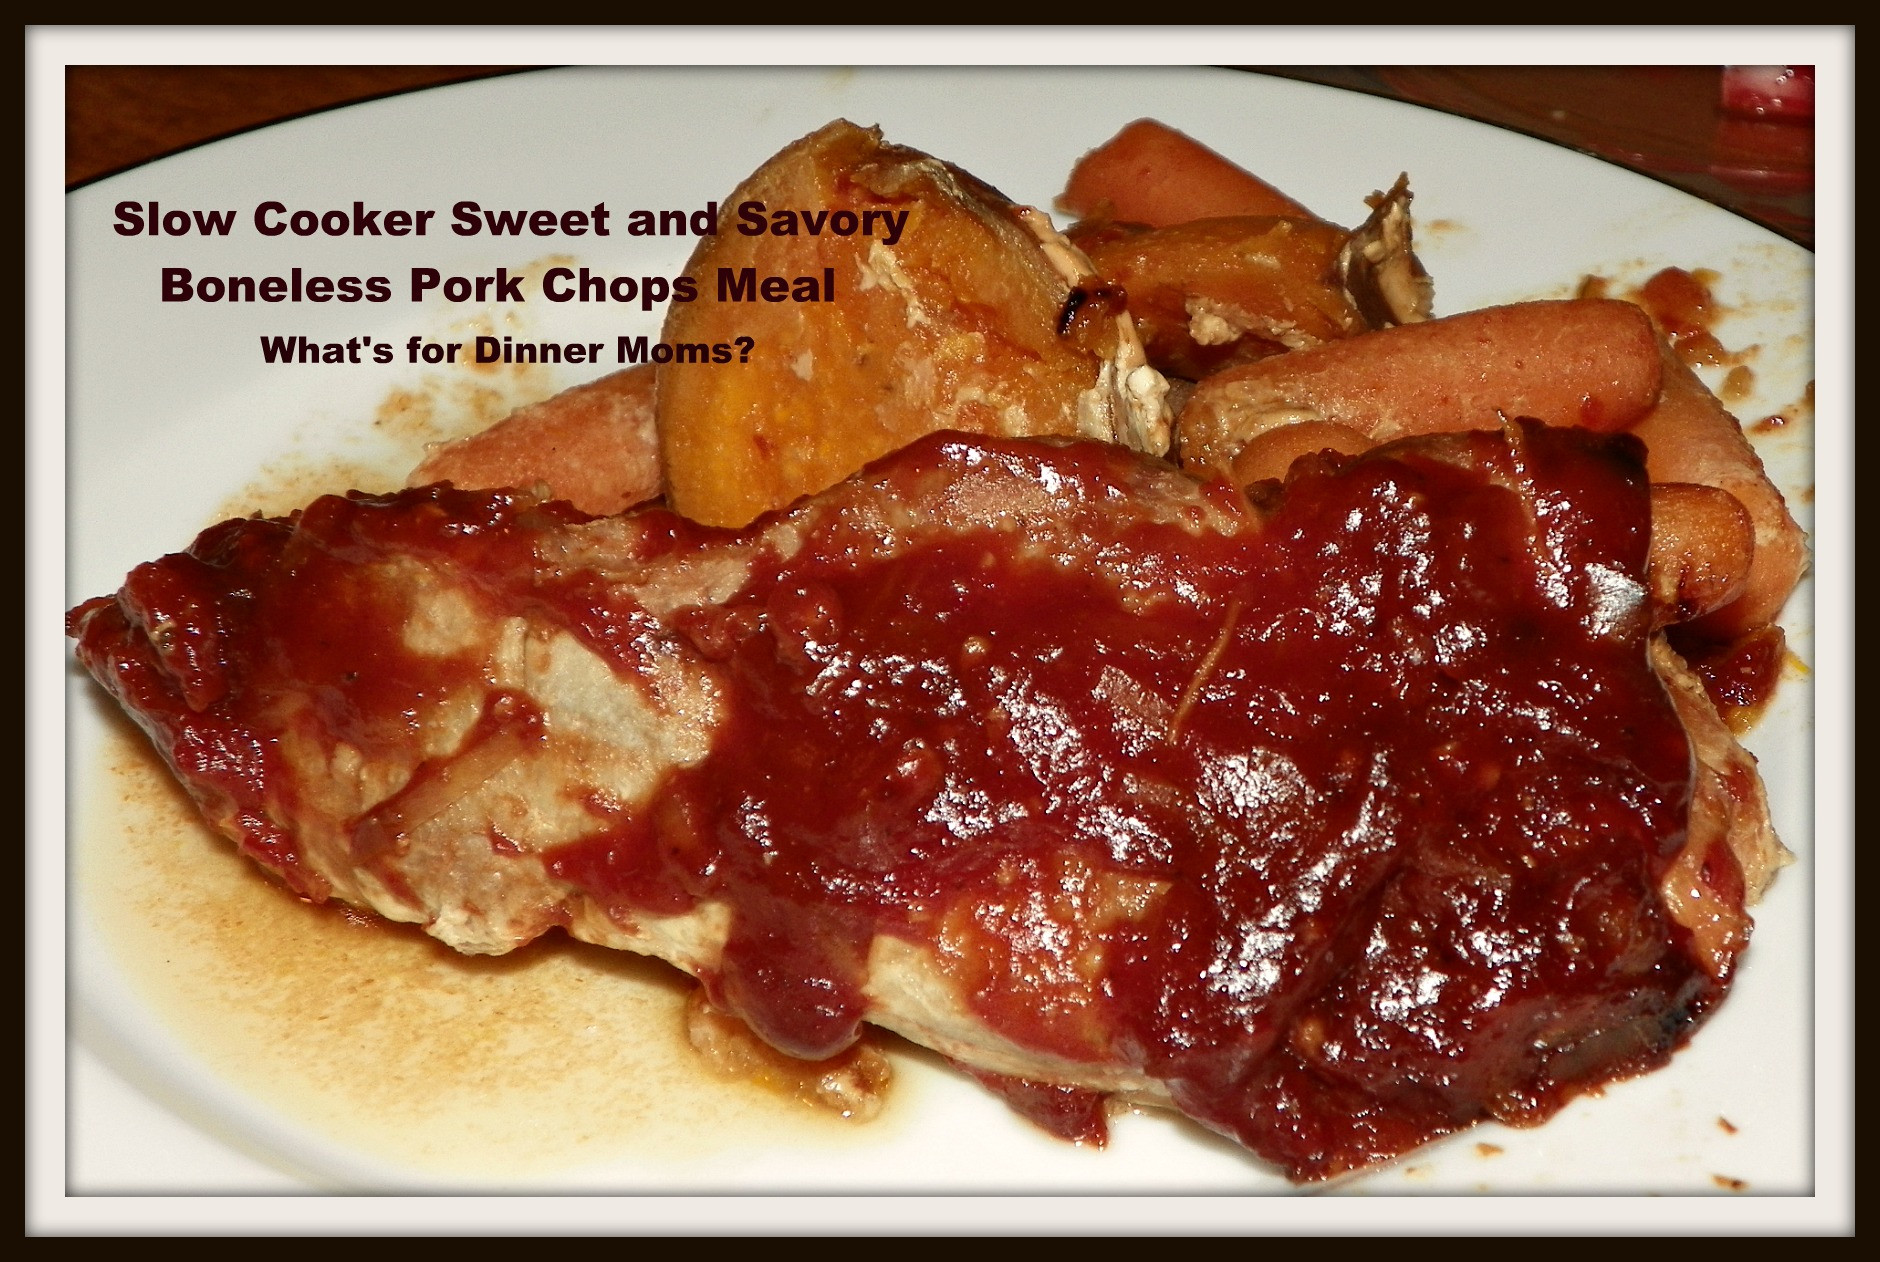 Slow Cooker Boneless Pork Chops
 Slow Cooker Sweet and Savory Boneless Pork Chops Meal